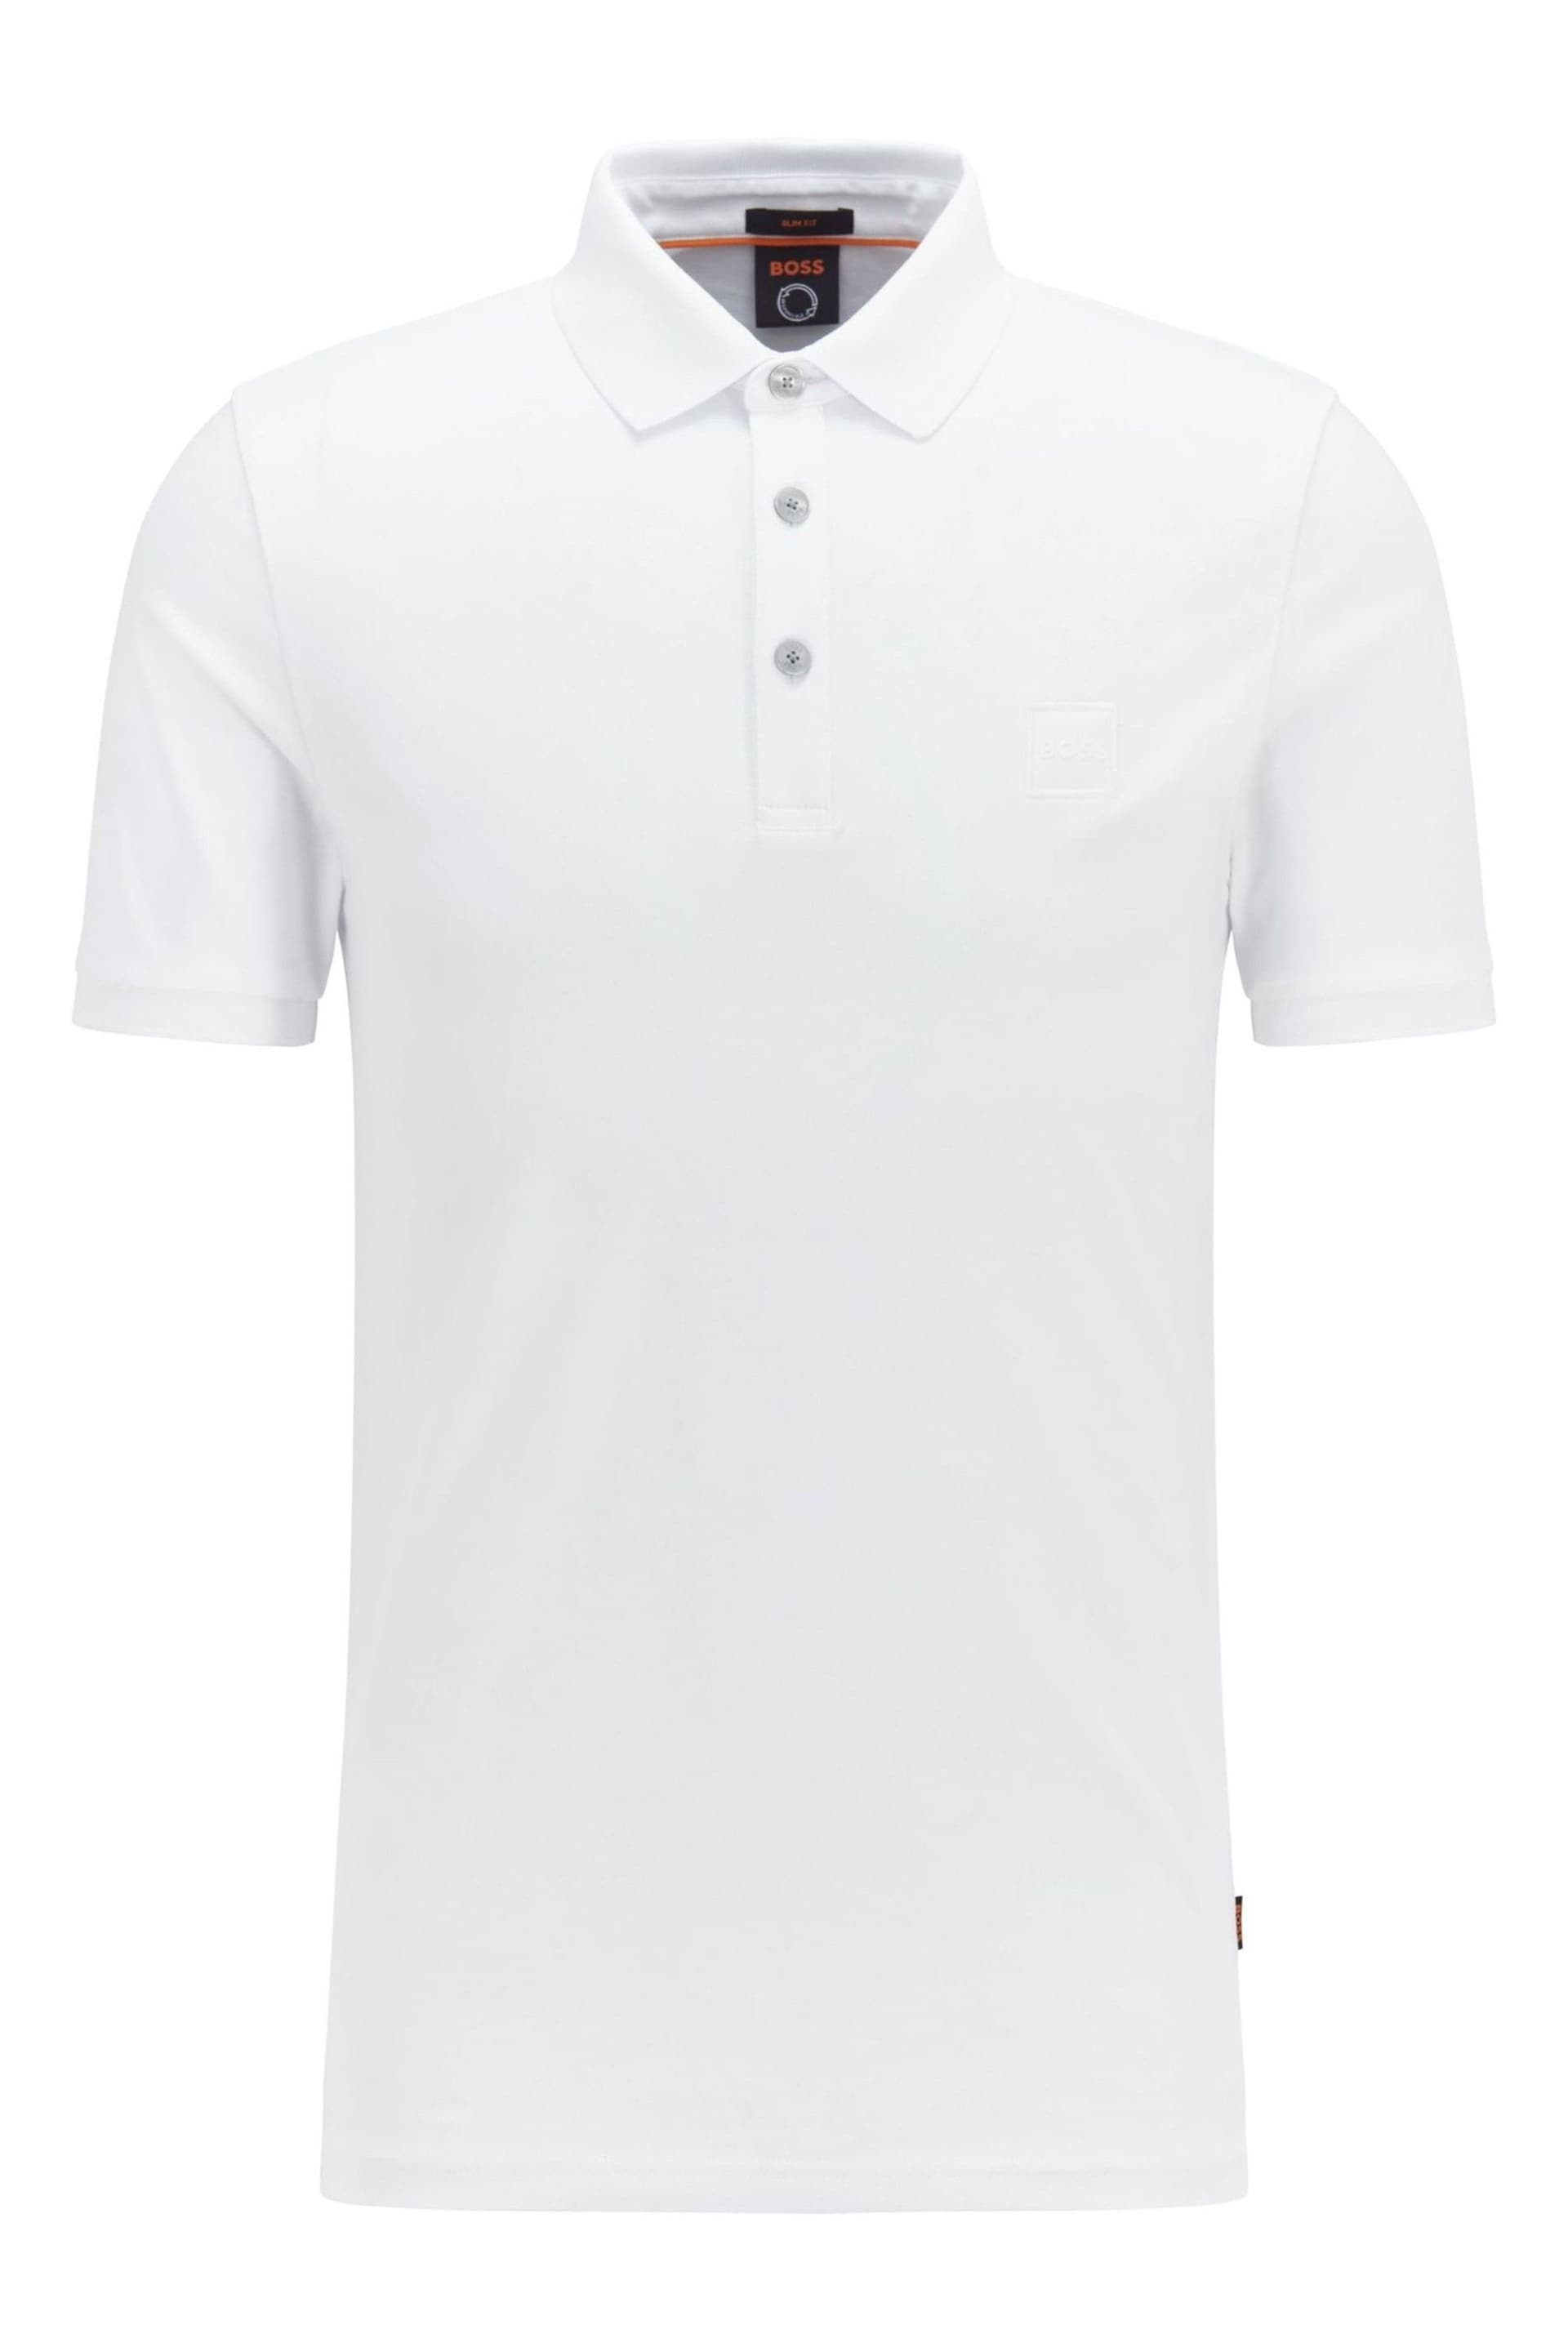 BOSS White Passenger Polo Shirt - Image 5 of 5